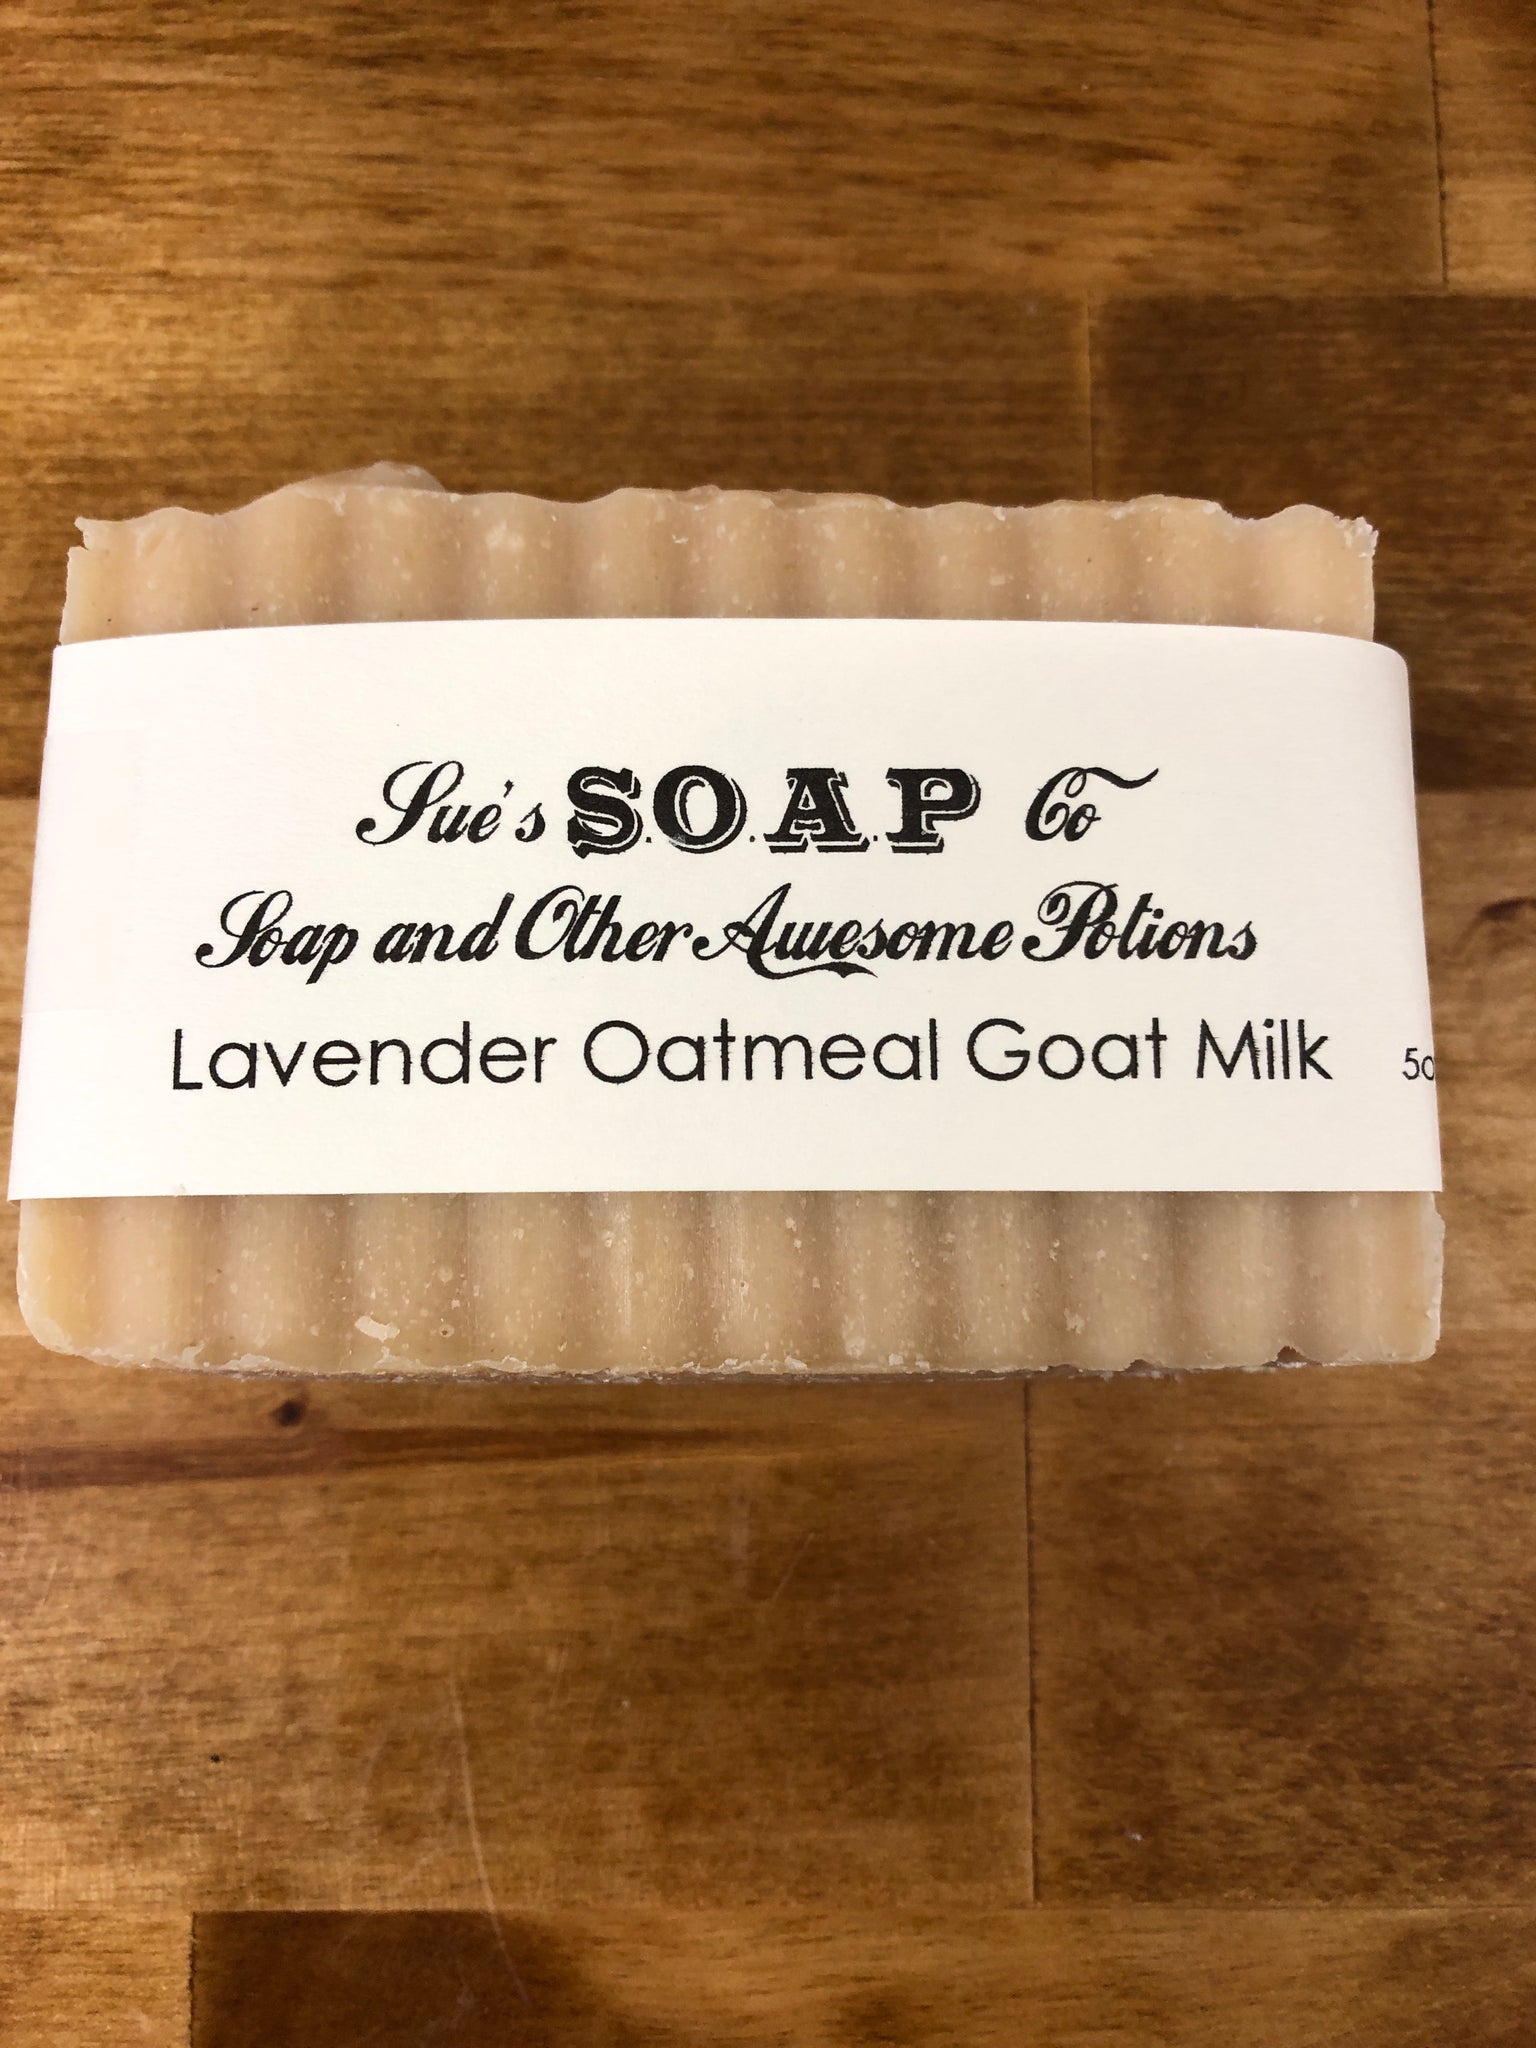 Lavender Oatmeal Goats Milk Soap